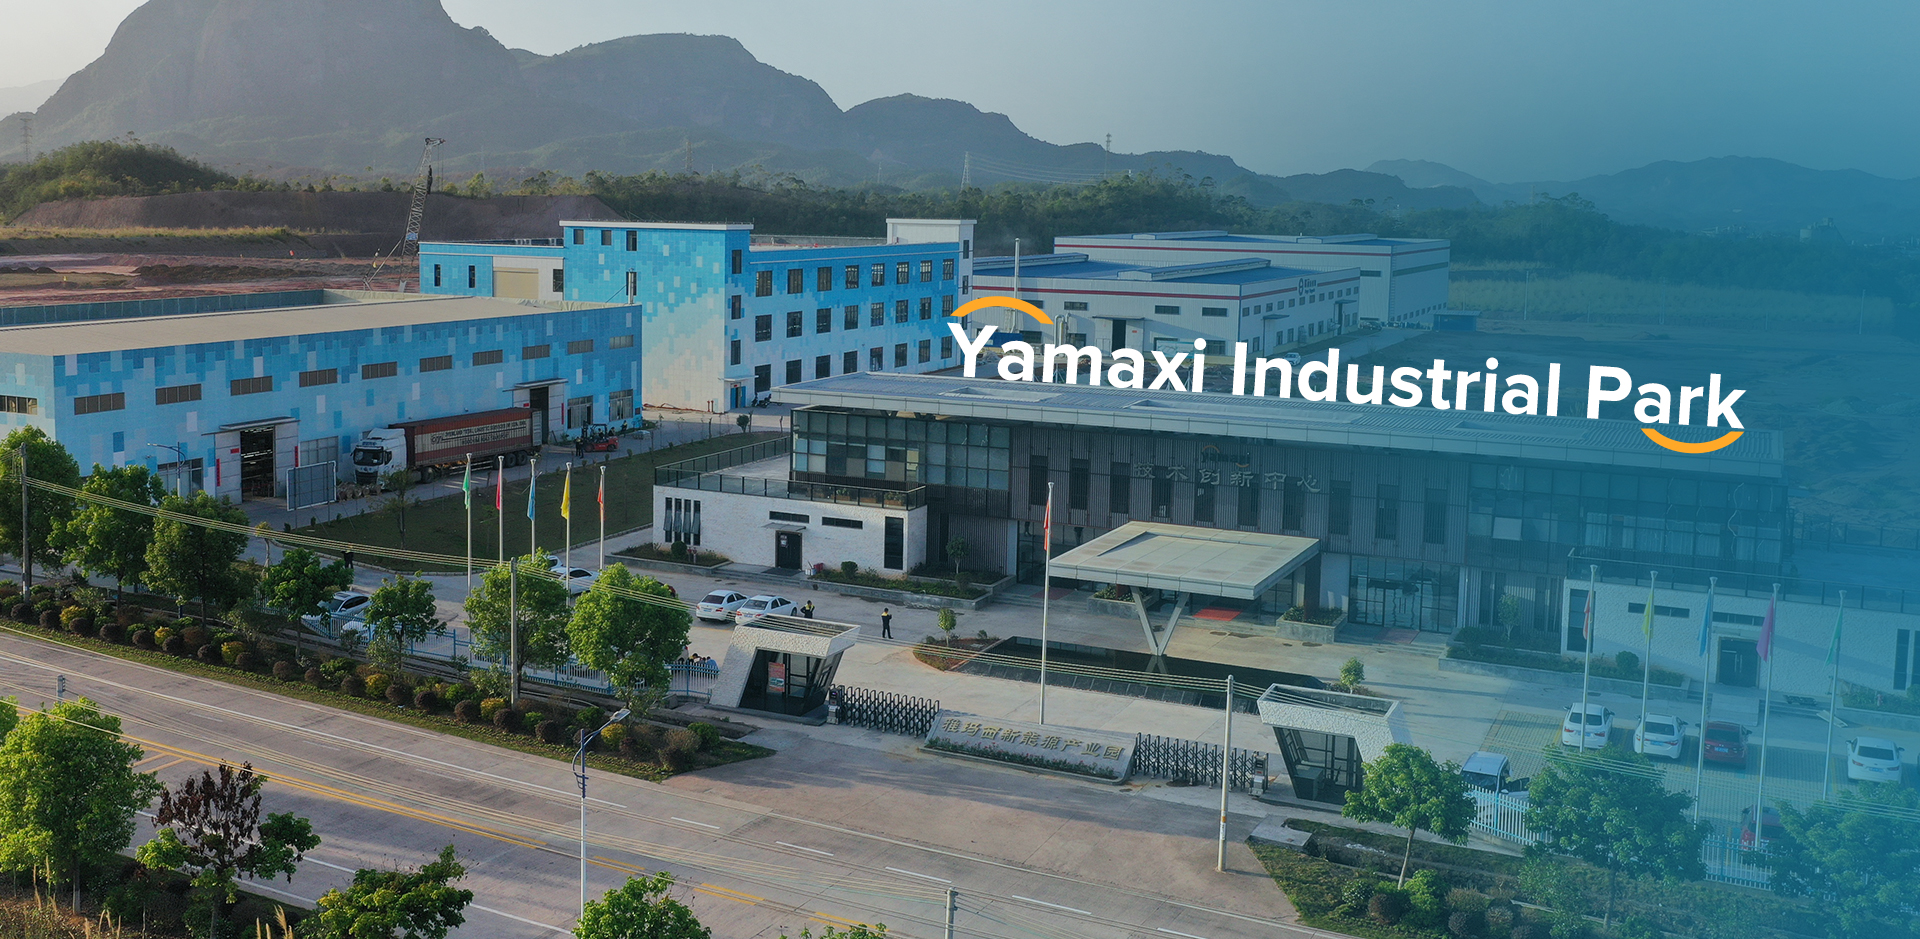 Parc Industrial Yamaxi